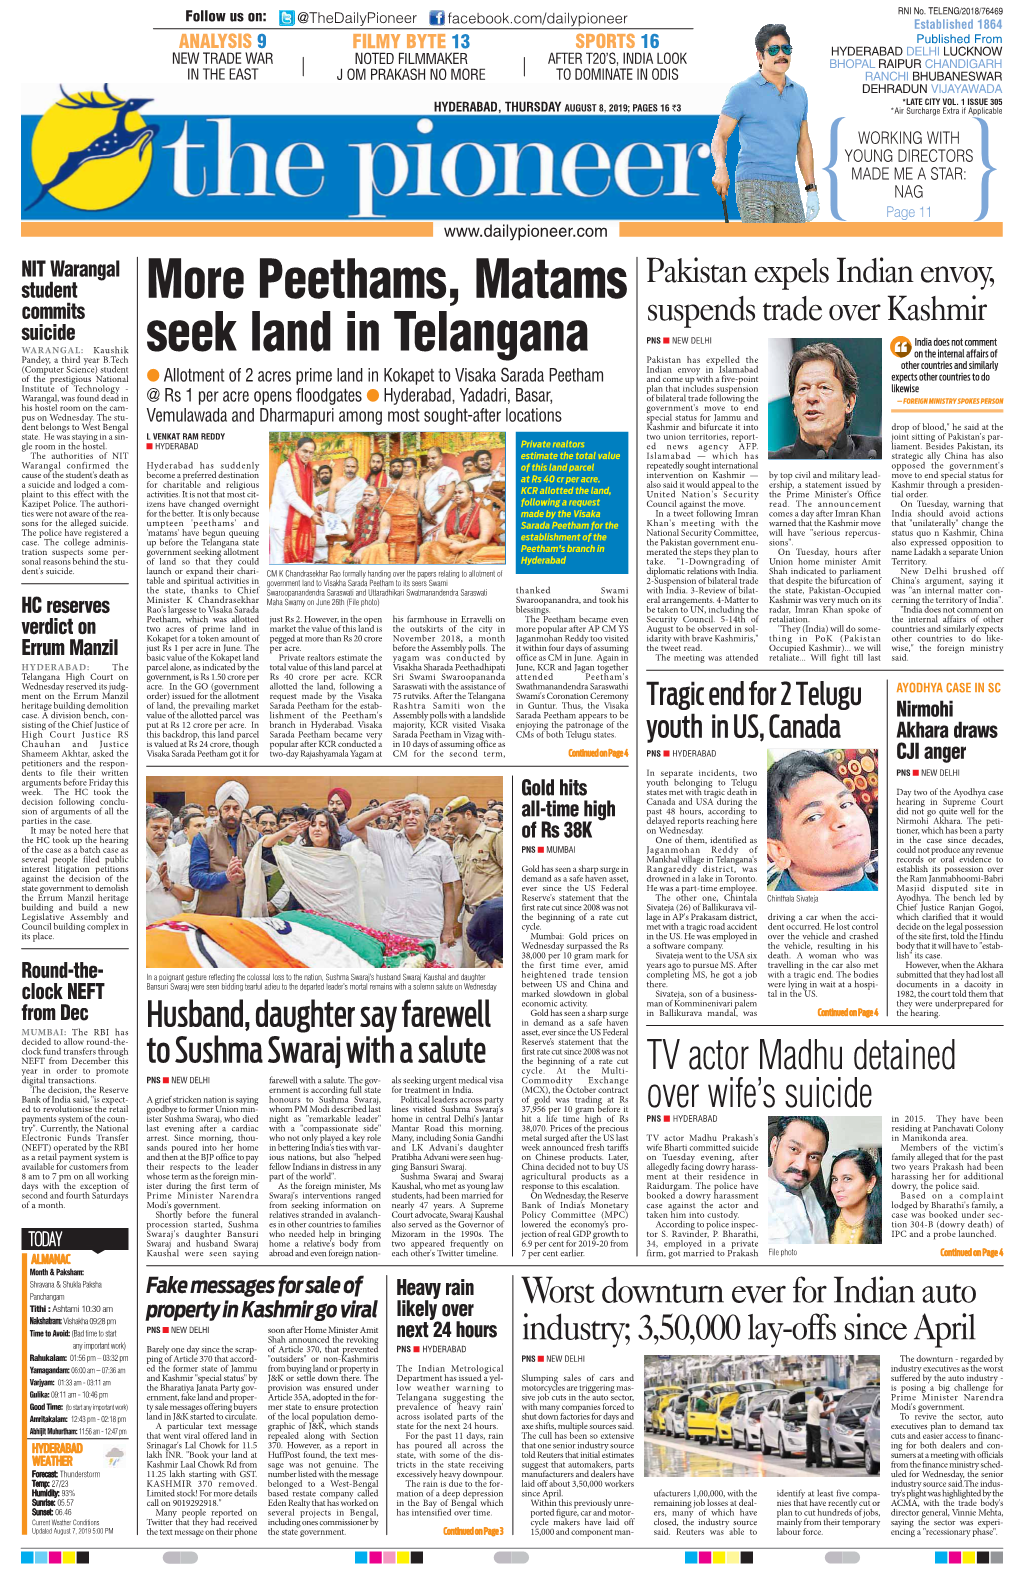 Peethams, Matams Seek Land in Telangana